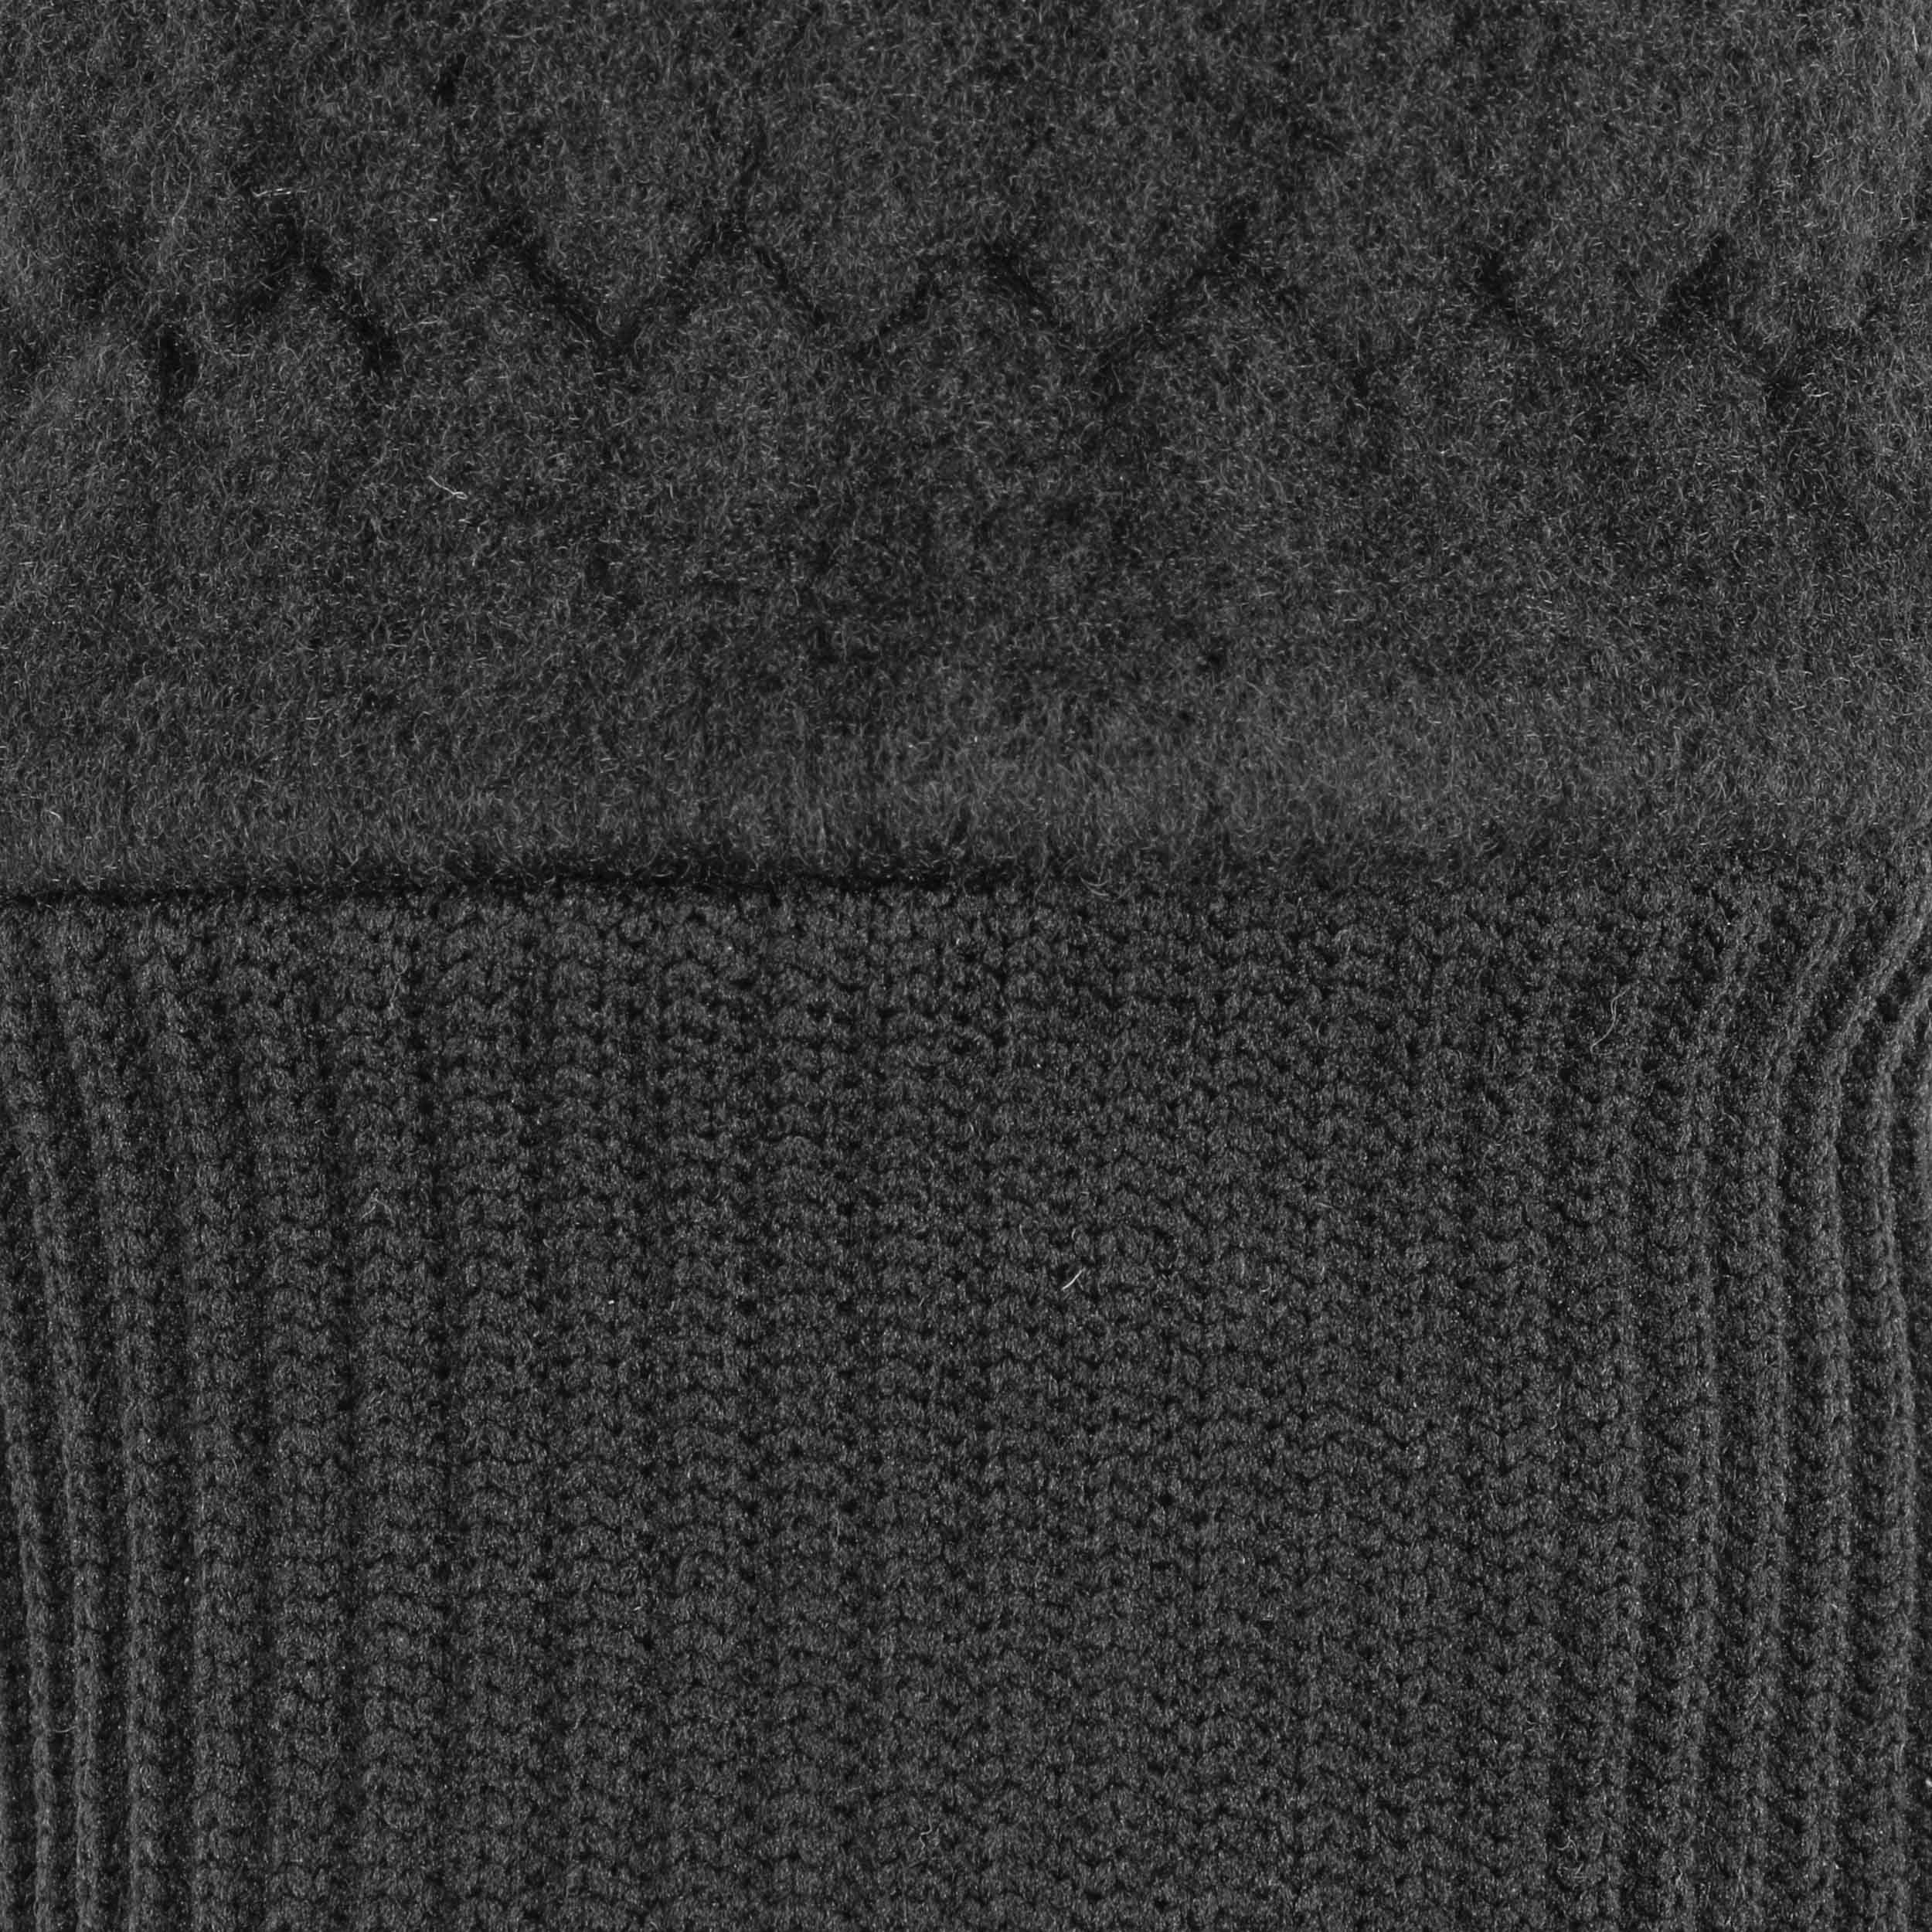 Vertigo Fleece Gloves by Wolfskin - 37,95 Jack €